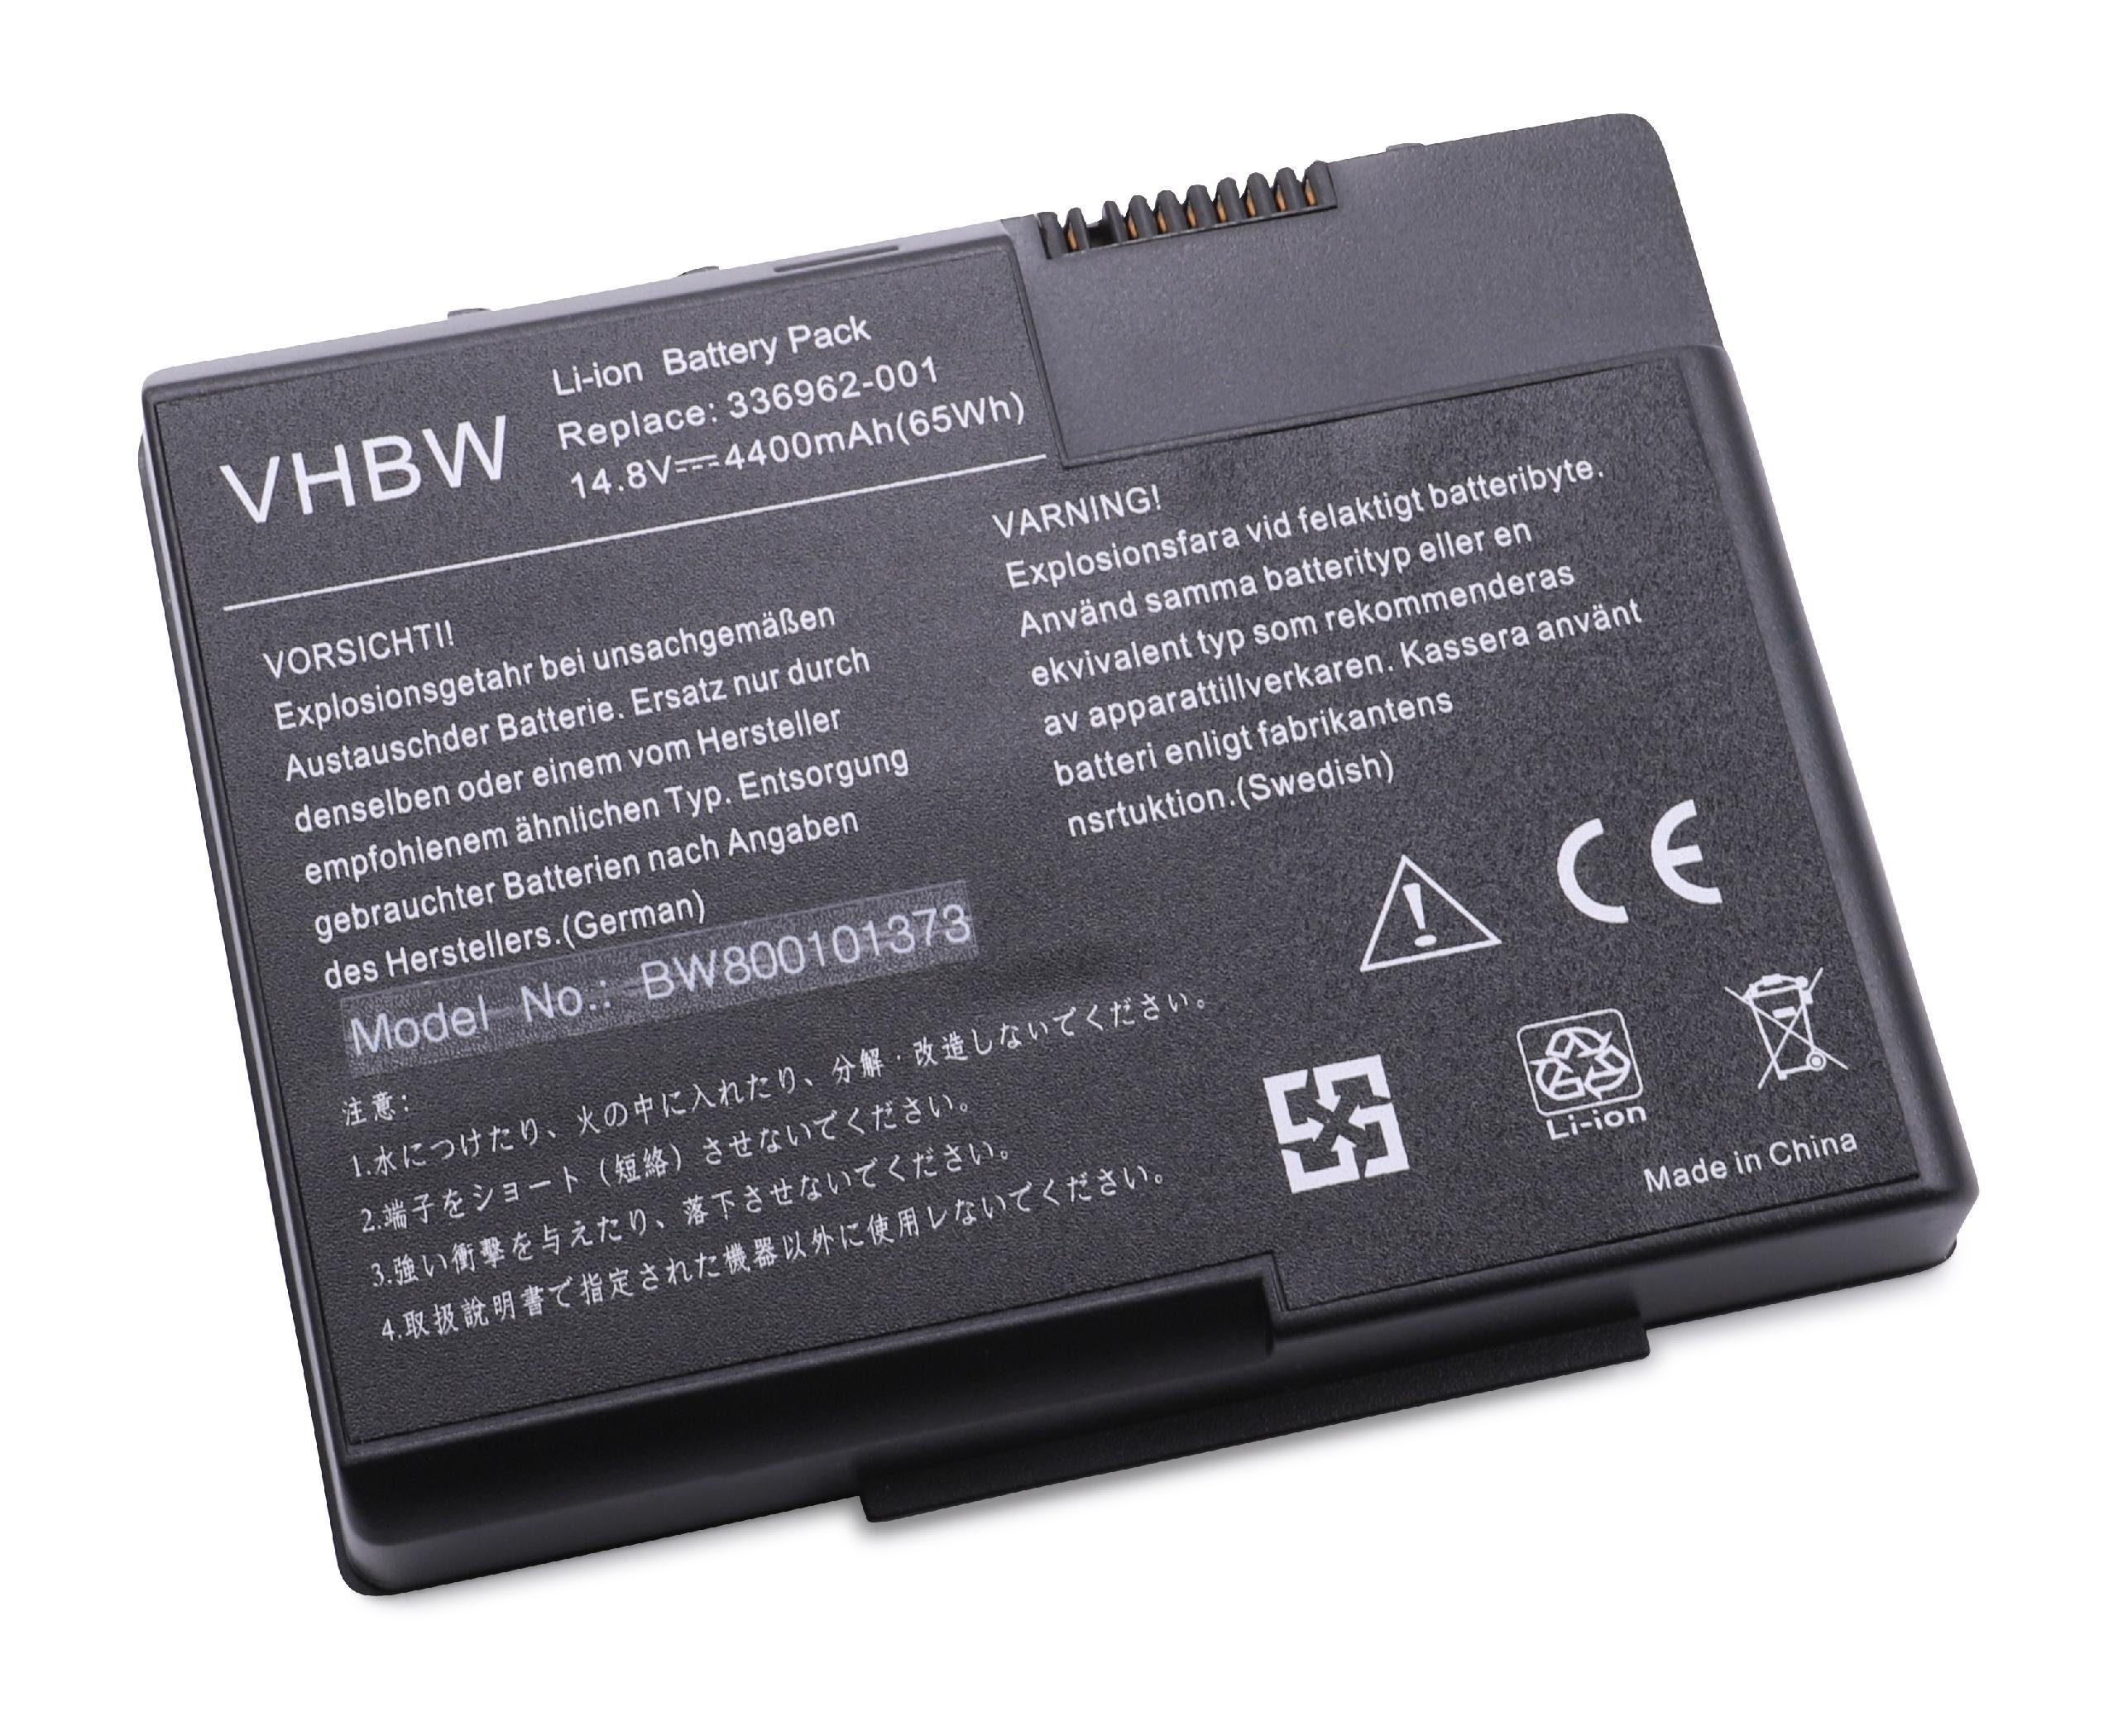 vhbw passend für HP Pavilion ZT3000, zt3000 (CTO) (DL811AV), zt3000 (CTO) Laptop-Akku 4400 mAh